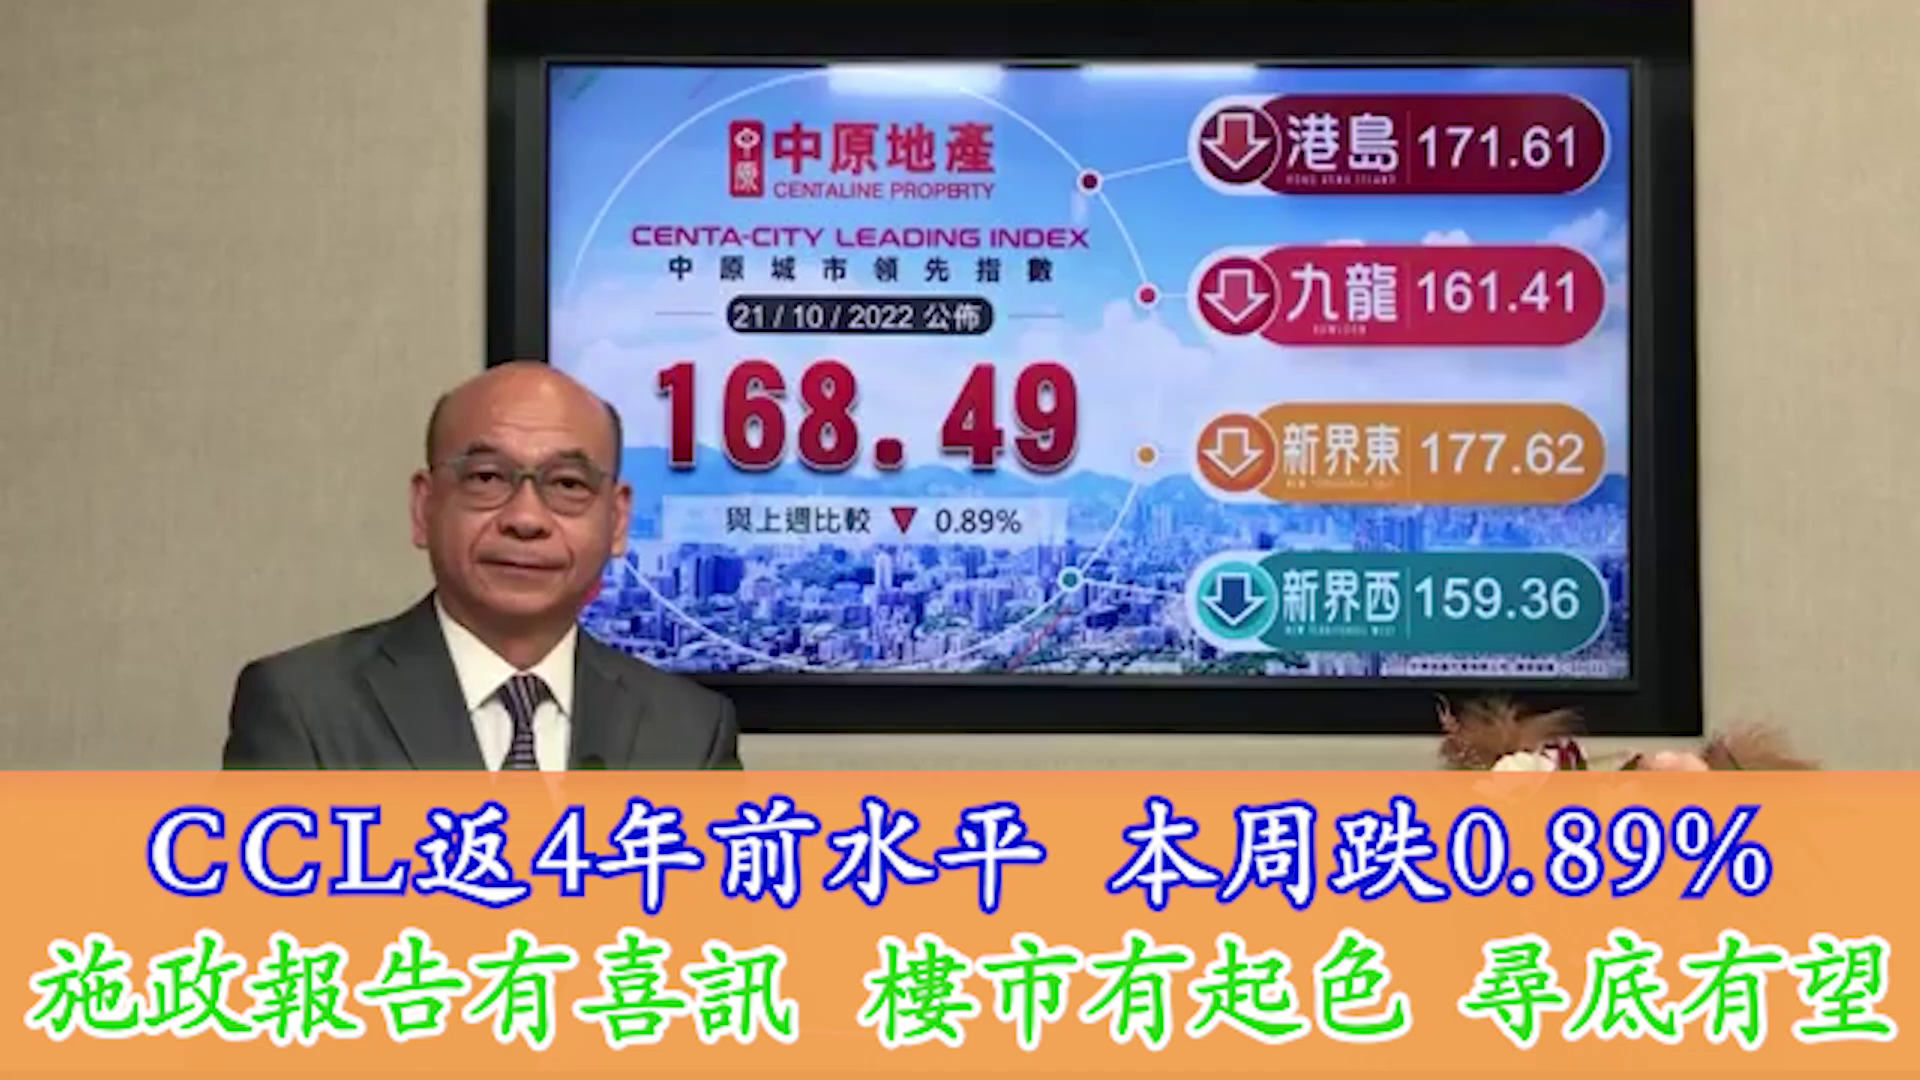 【CCL回到4年前水平】 本周報168.49 跌0.89% 中原地產住宅部總裁